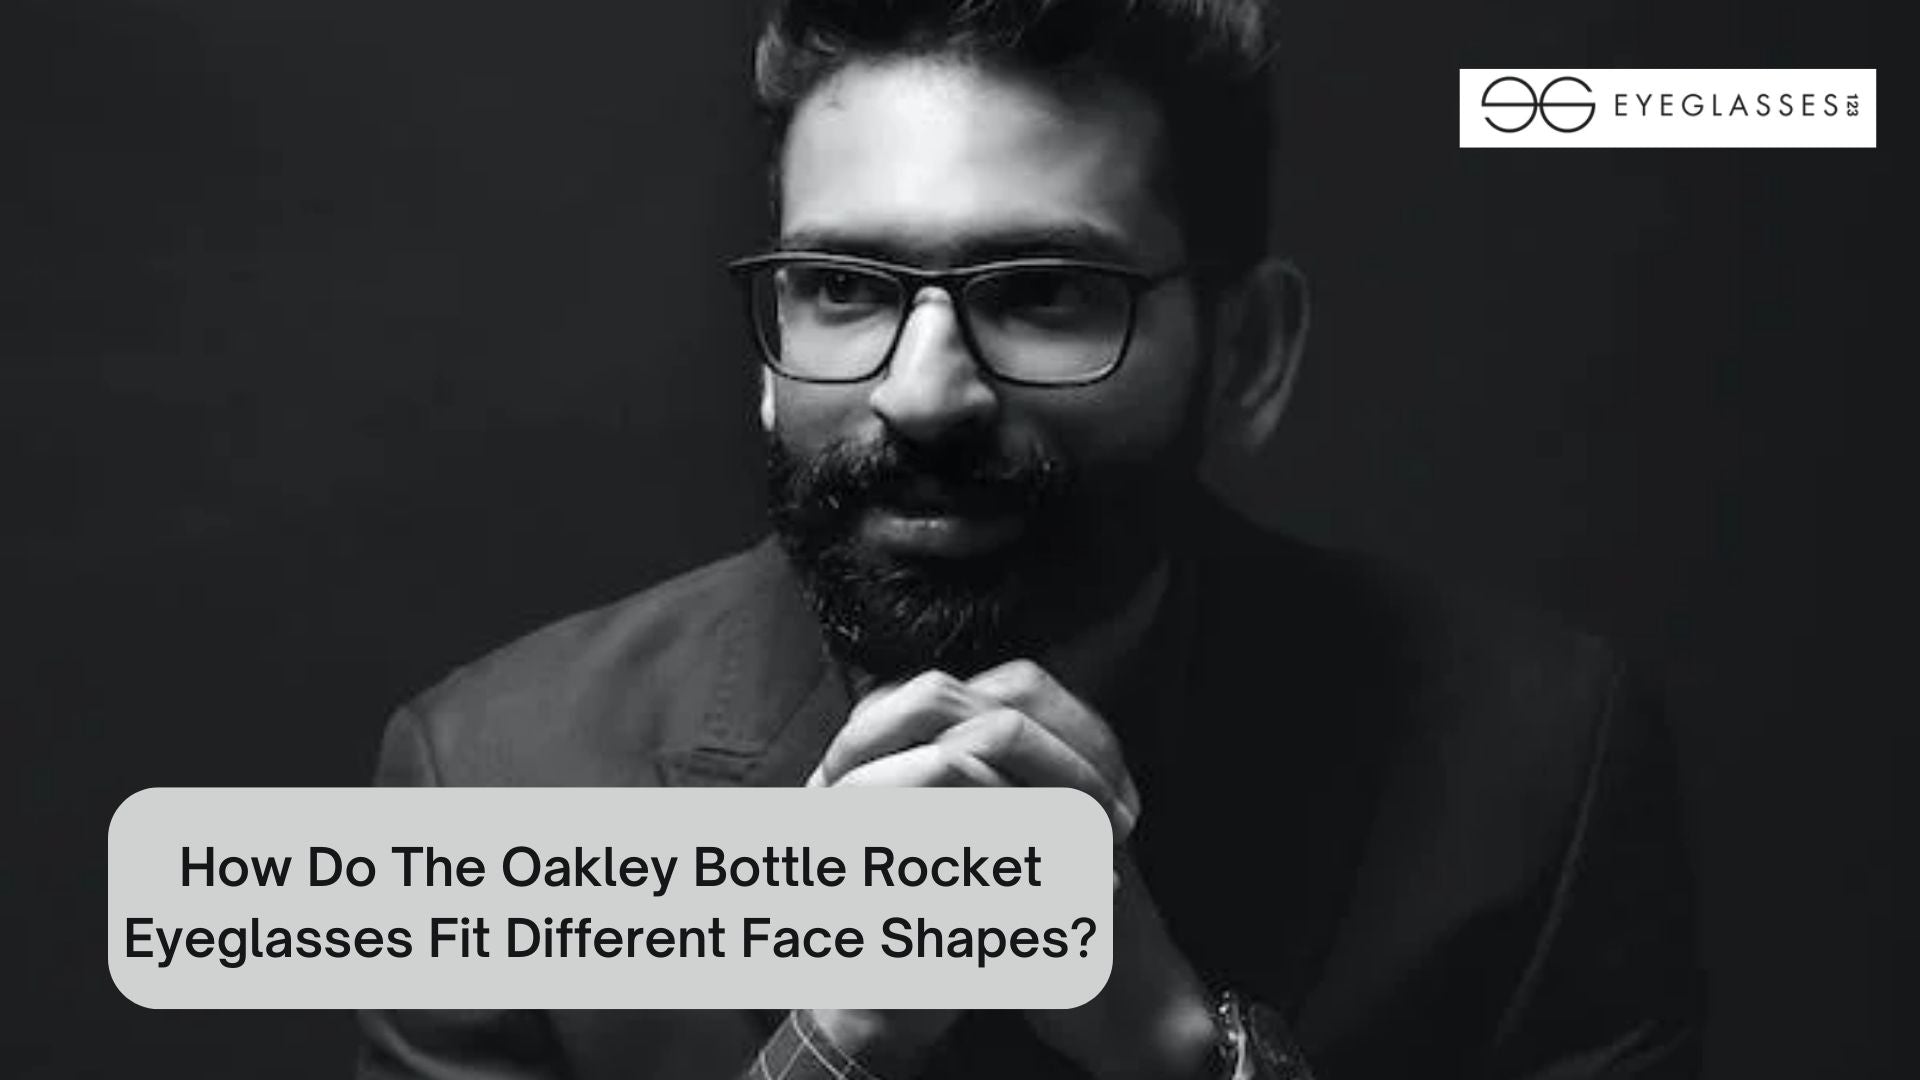 How Do The Oakley Bottle Rocket Eyeglasses Fit Different Face Shapes?